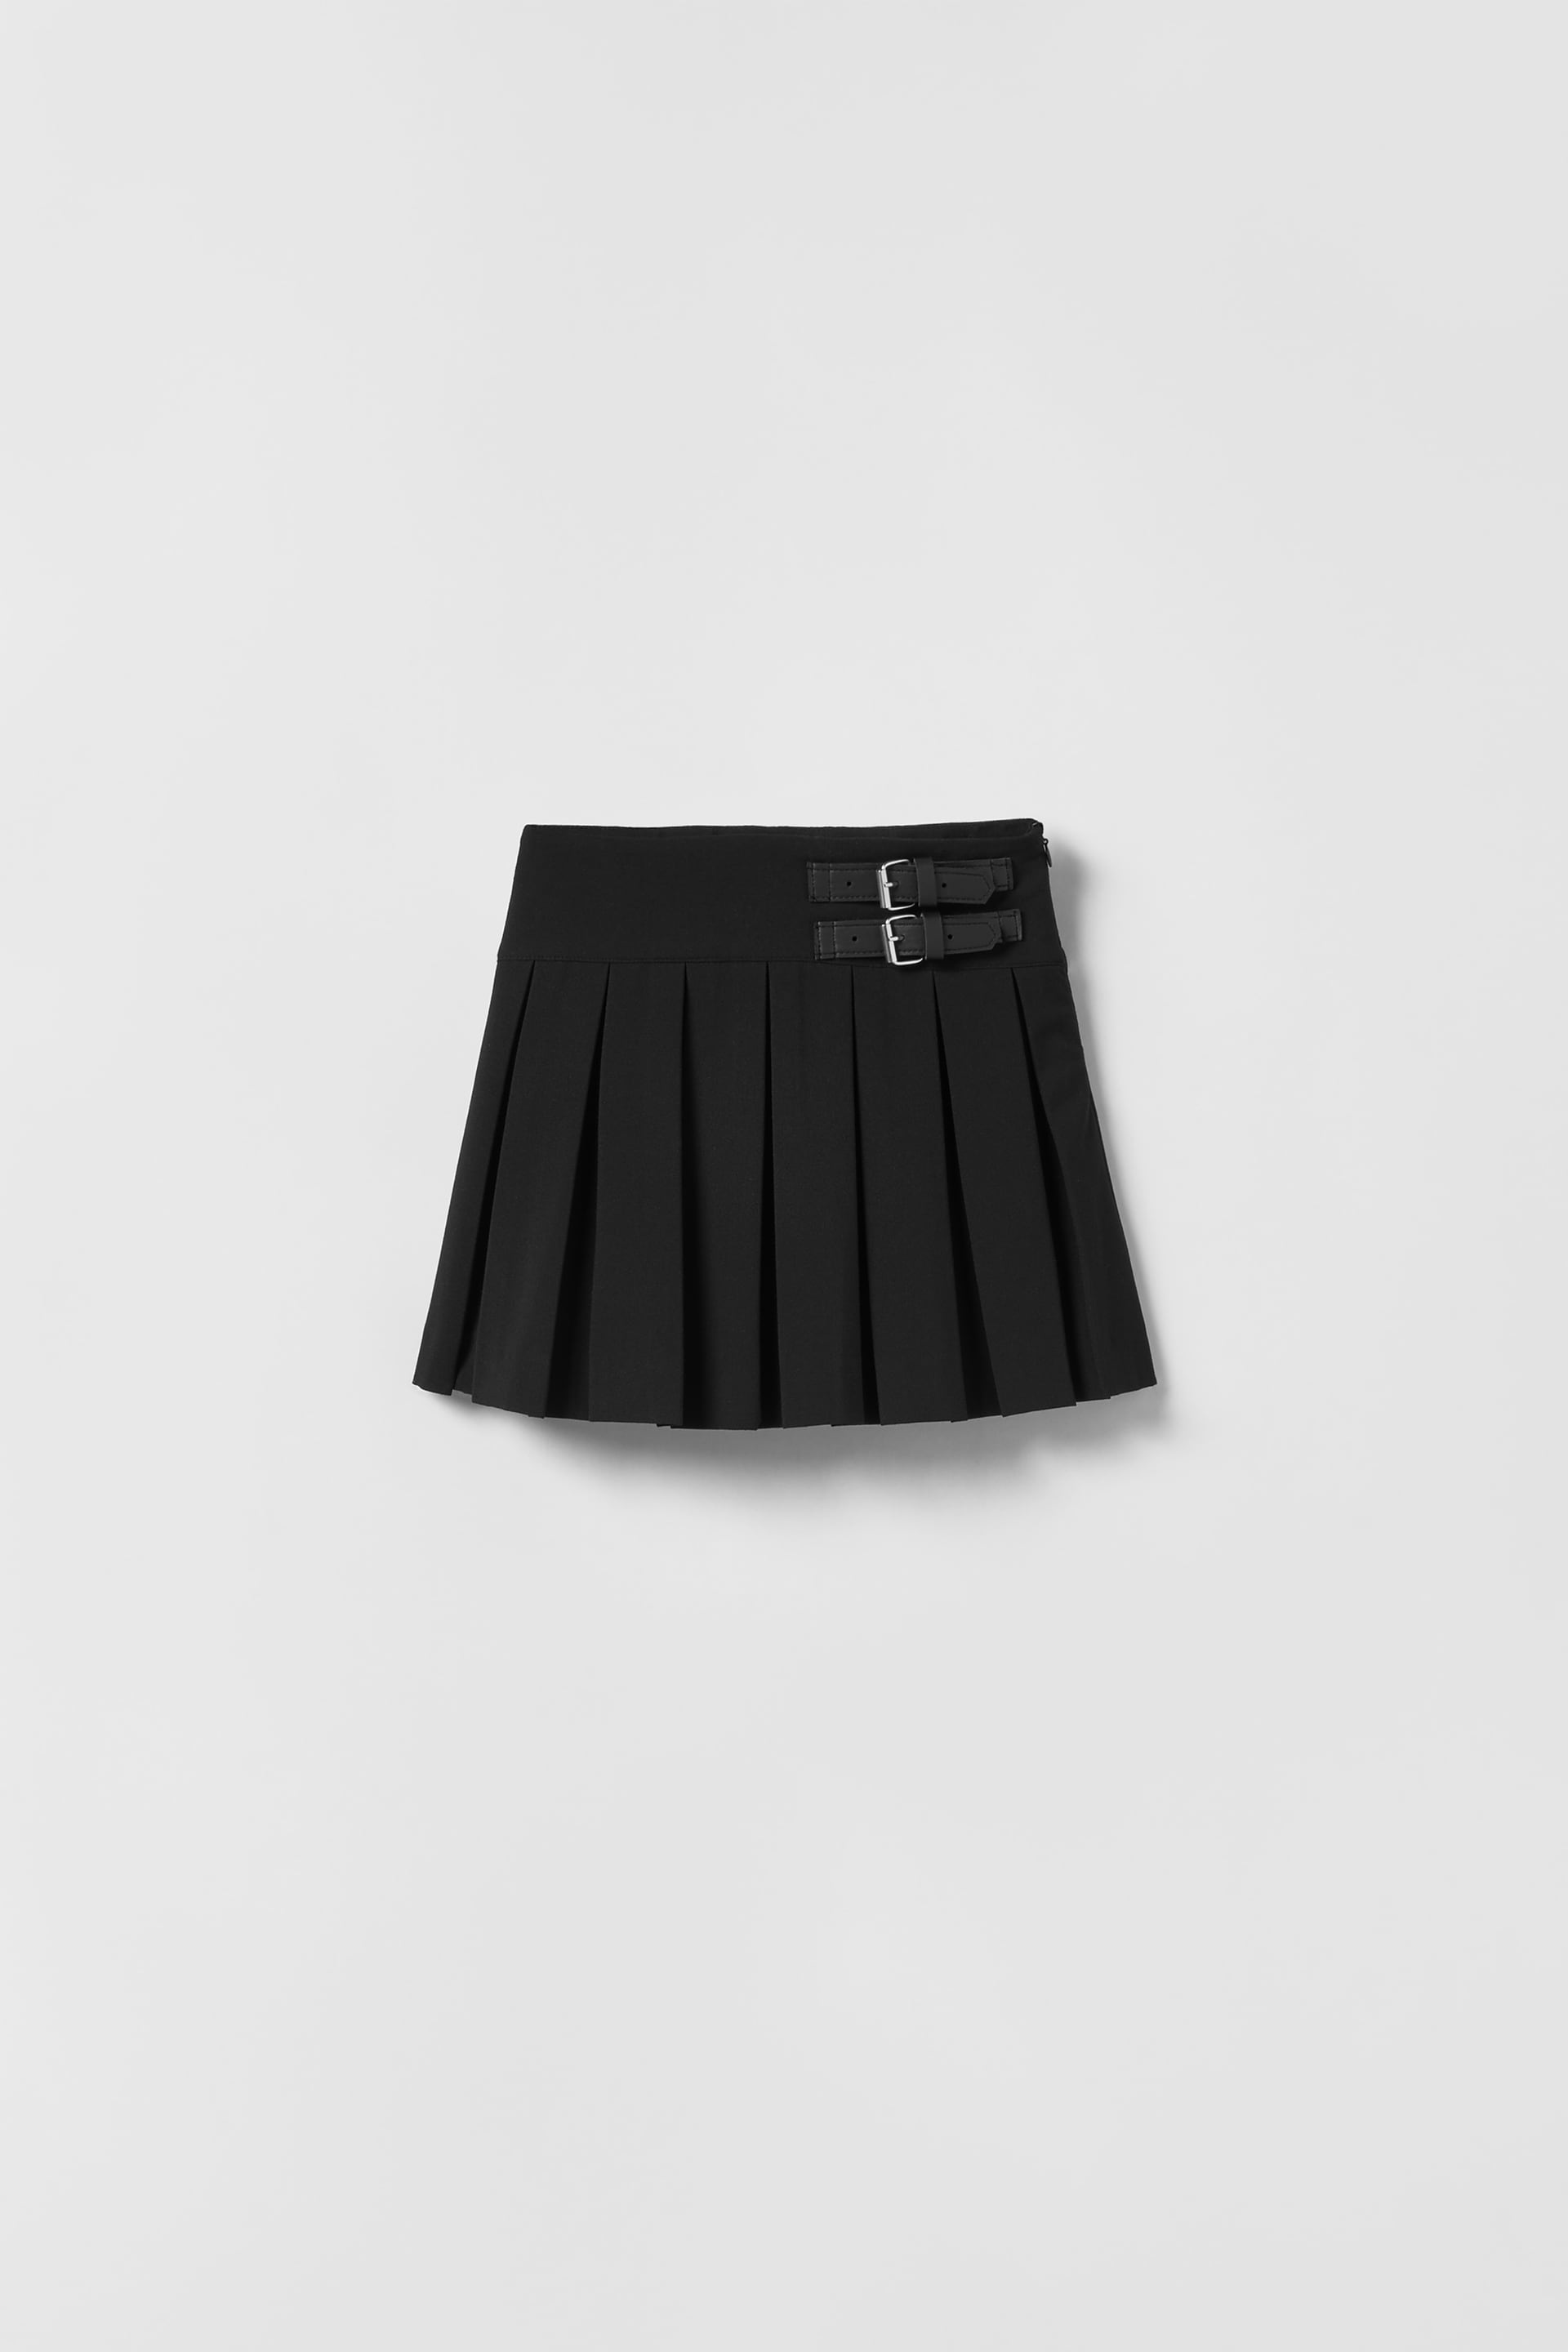 SALE／80%OFF】 ZARA KIDS スパンコール スカート 128cm